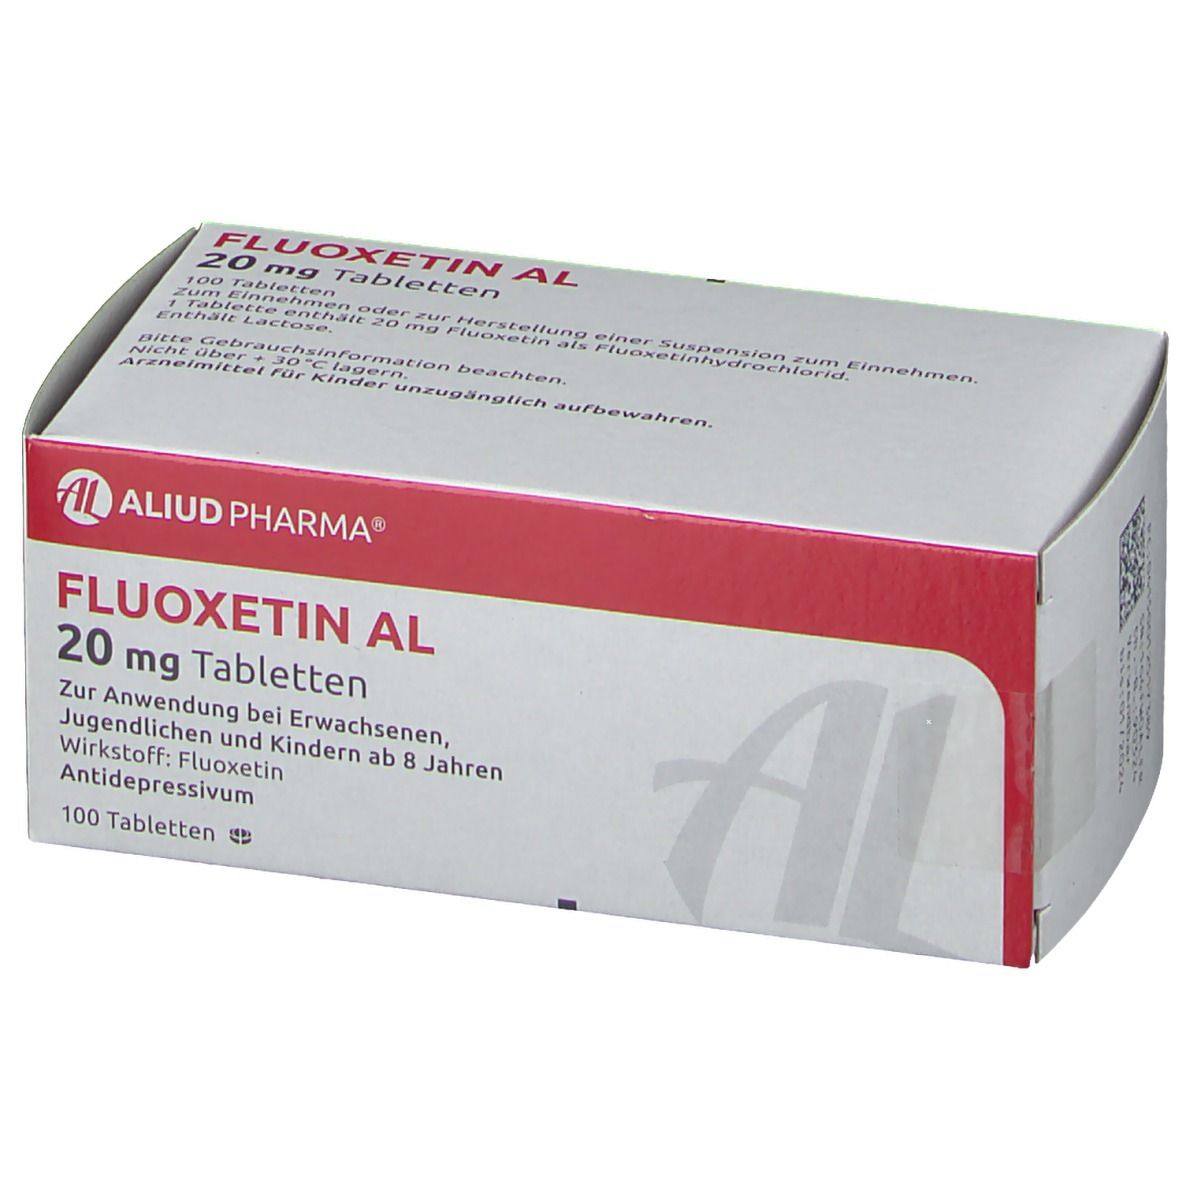 Fluoxetin AL 20 mg